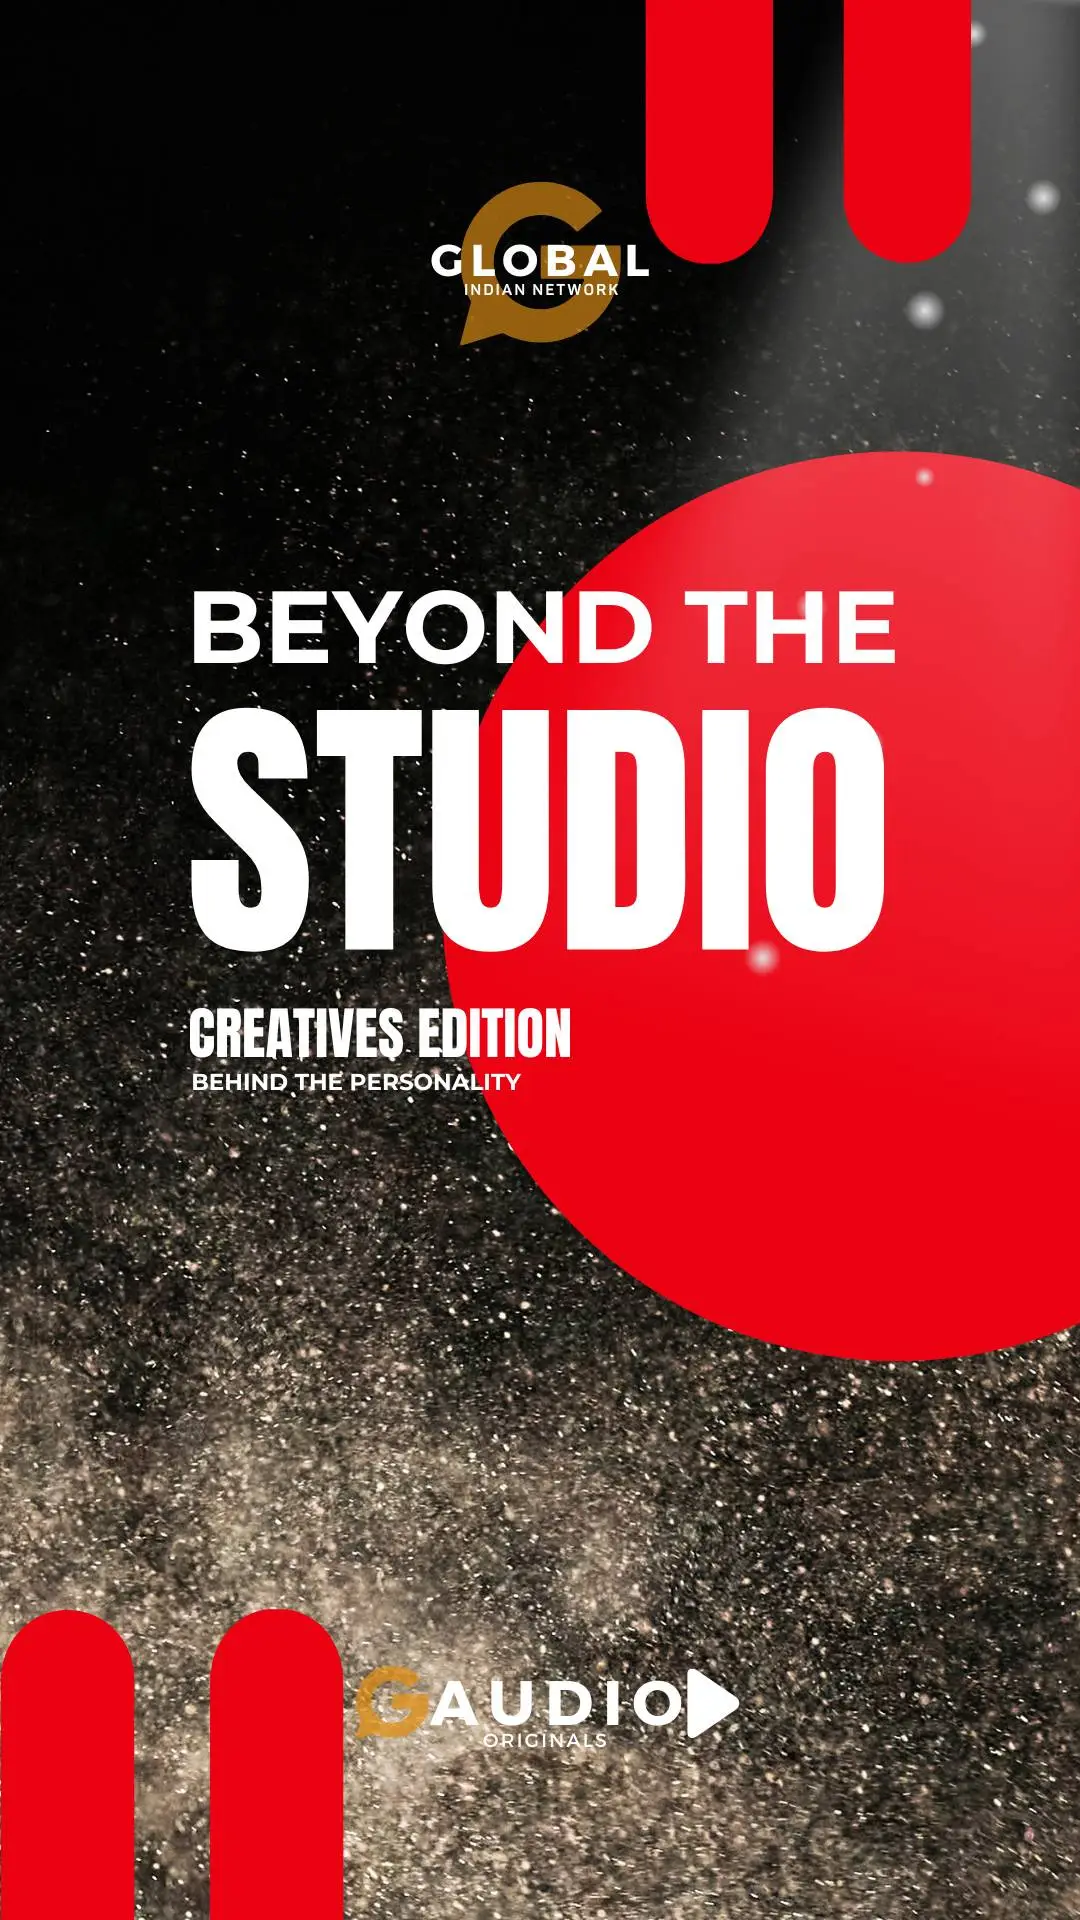 Beyond the Studio Story